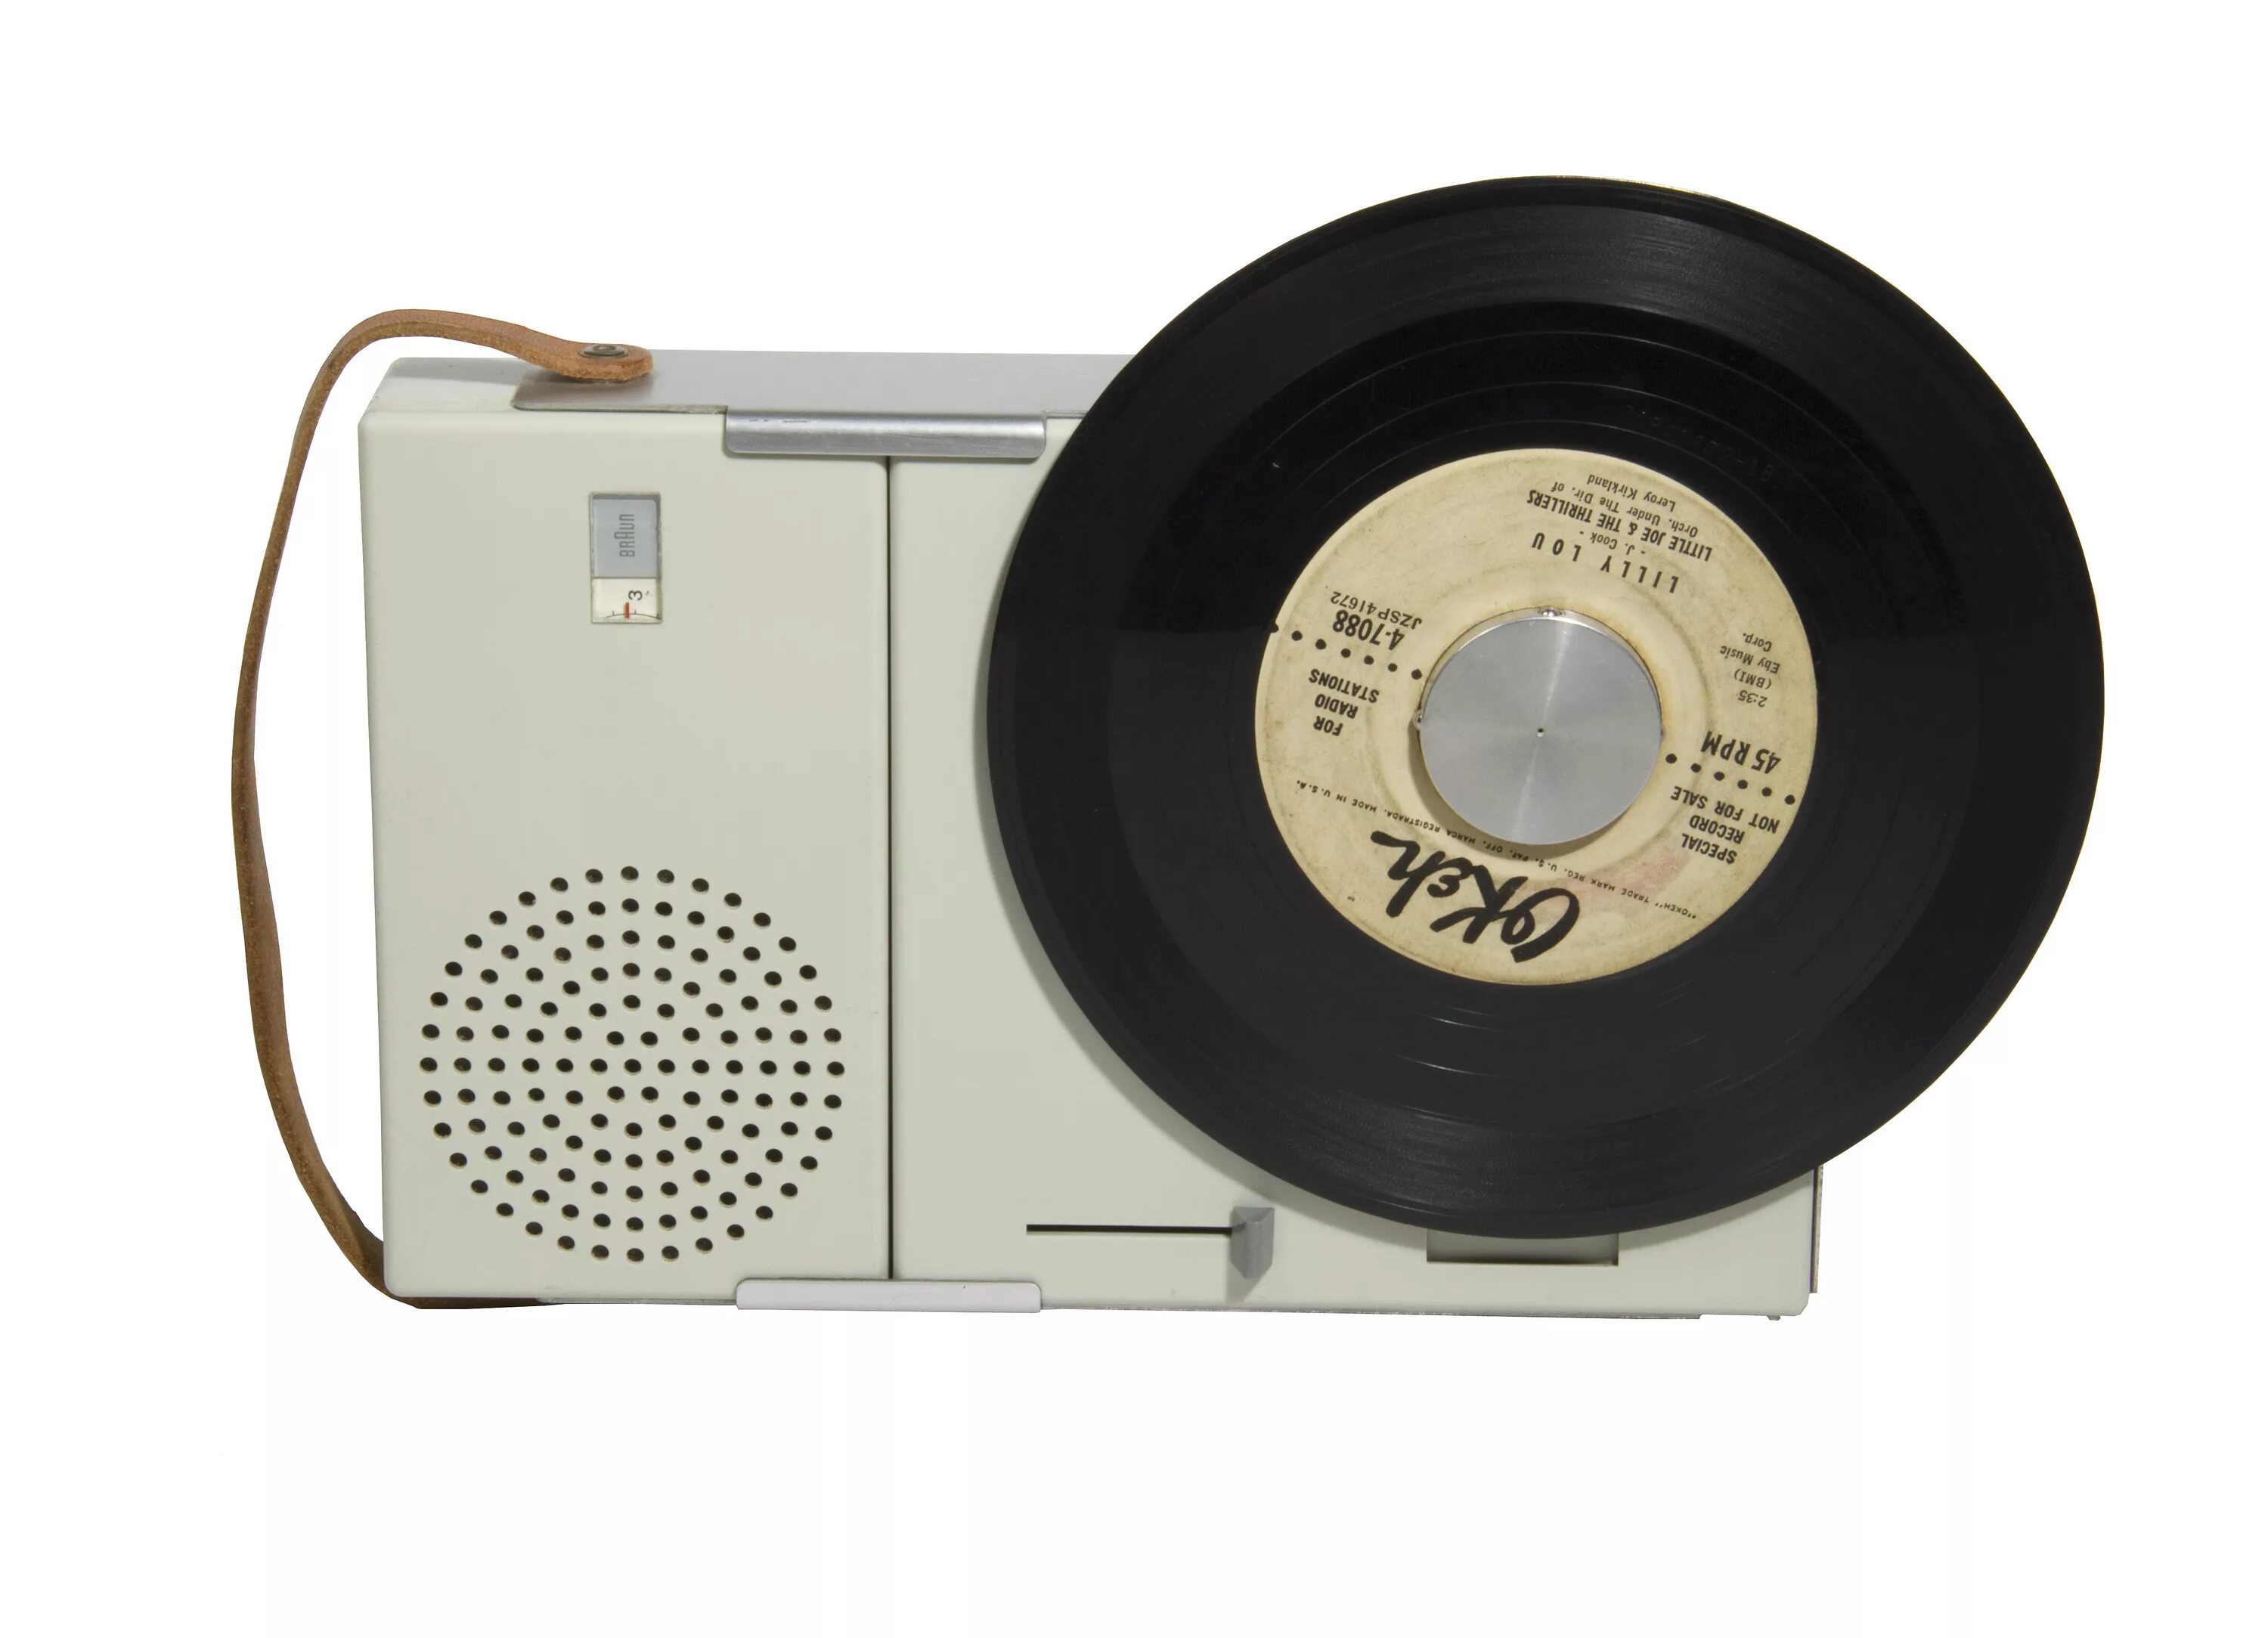 Braun Дитер Рамс. Плеер Дитер Рамс. Радио Braun tp1 (1959). Дитер Рамс радиоприемник.